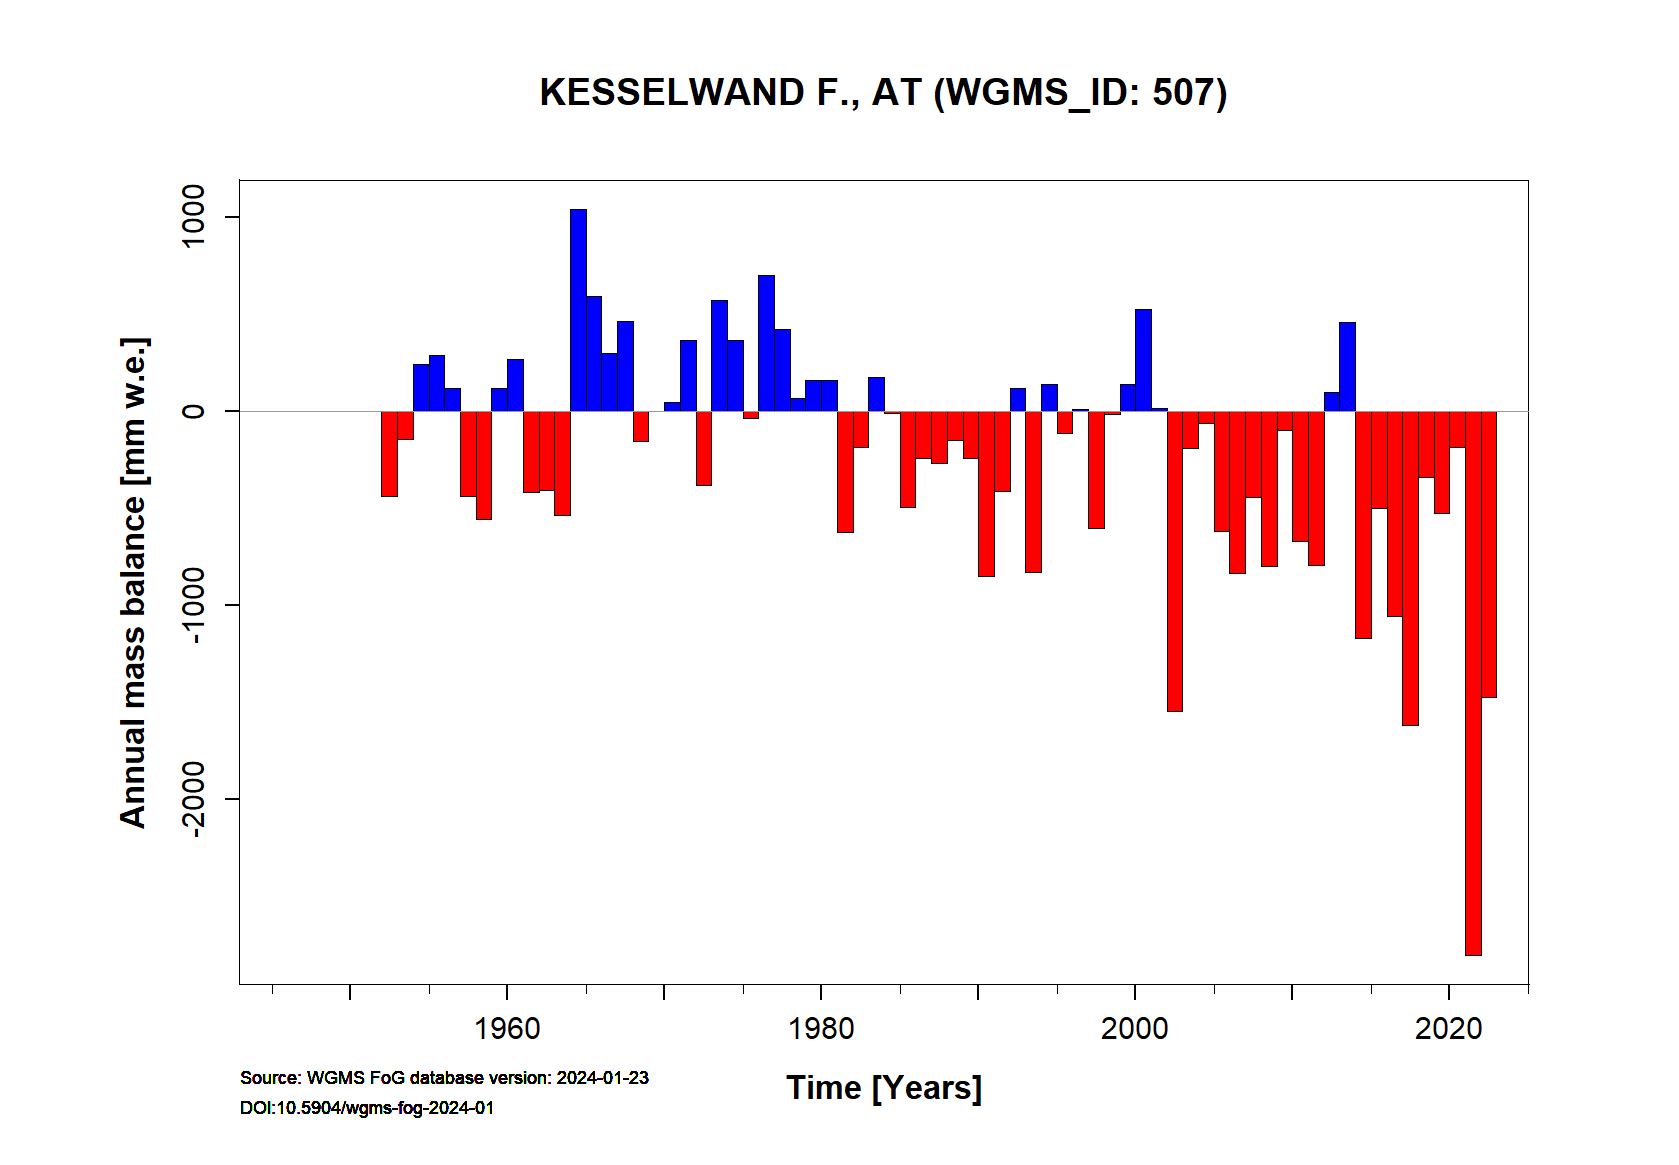 Kesselwandferner Annual Mass Balance (WGMS, 2016)